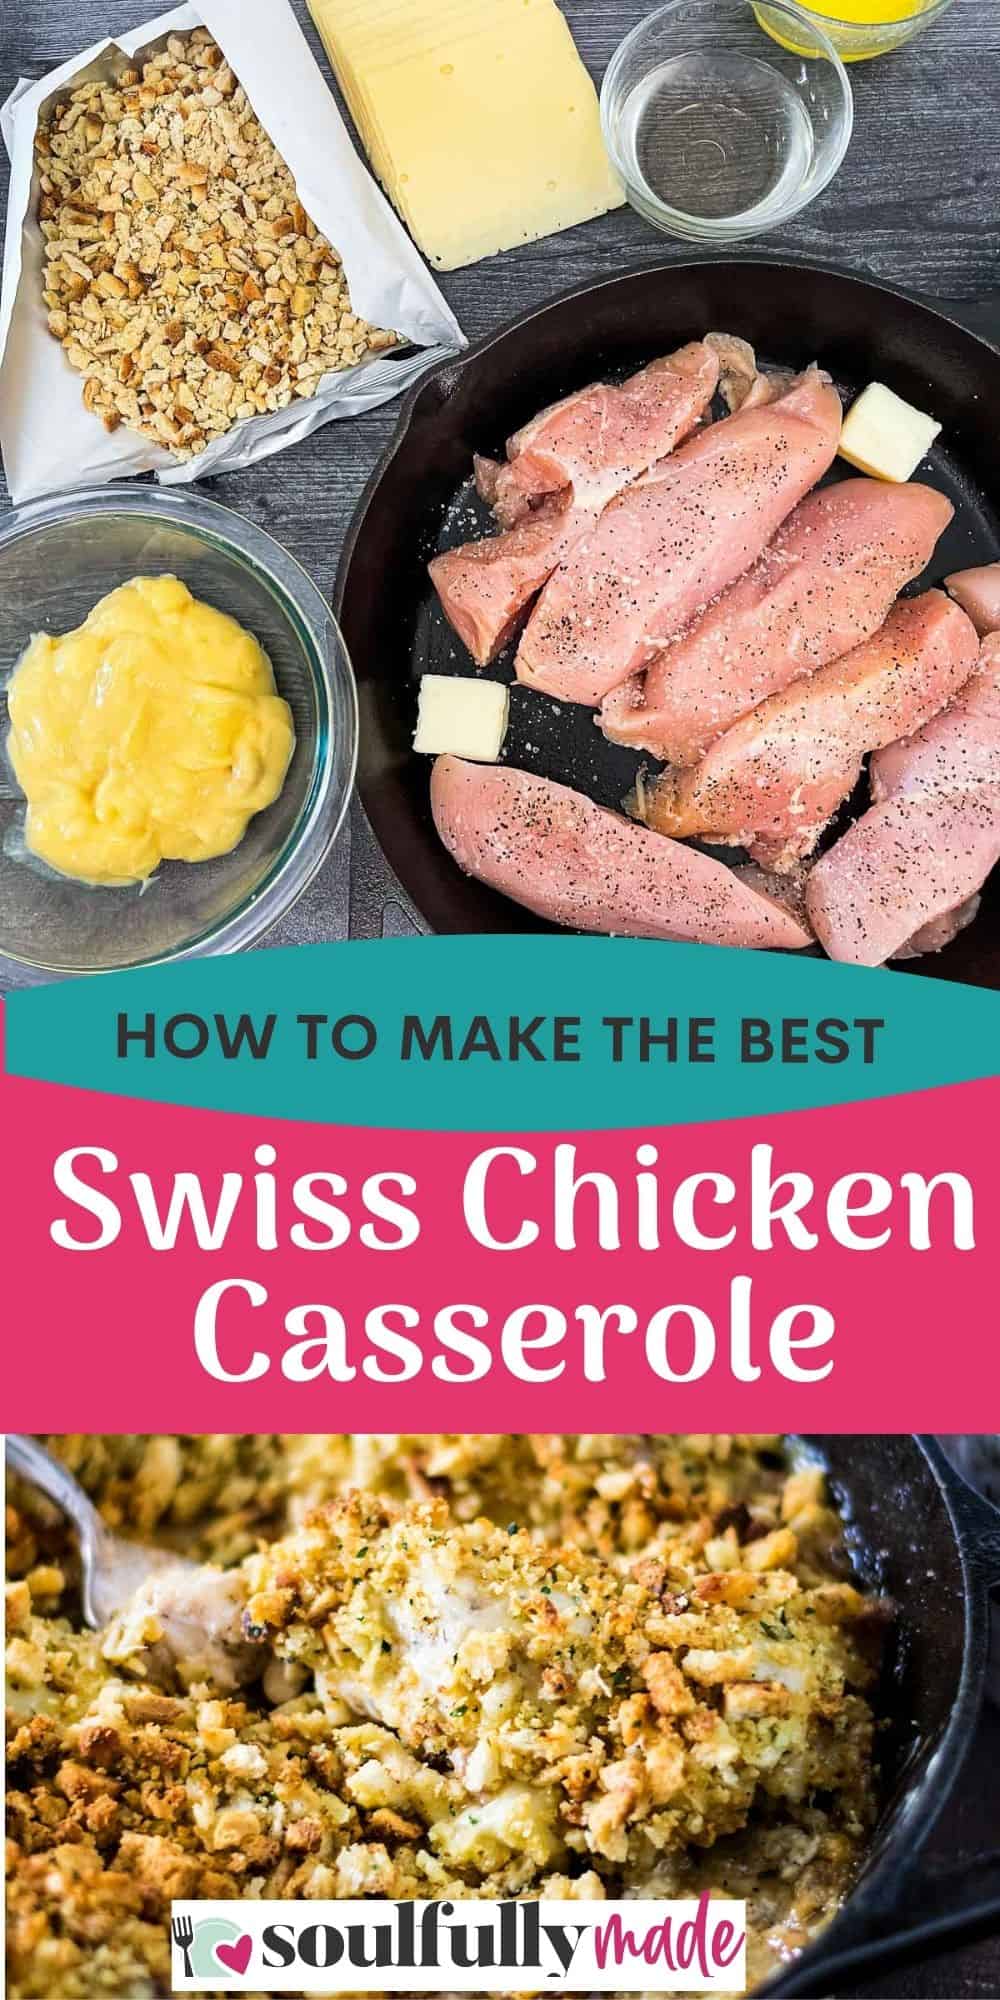 Creamy Swiss Chicken Casserole - Soulfully Made